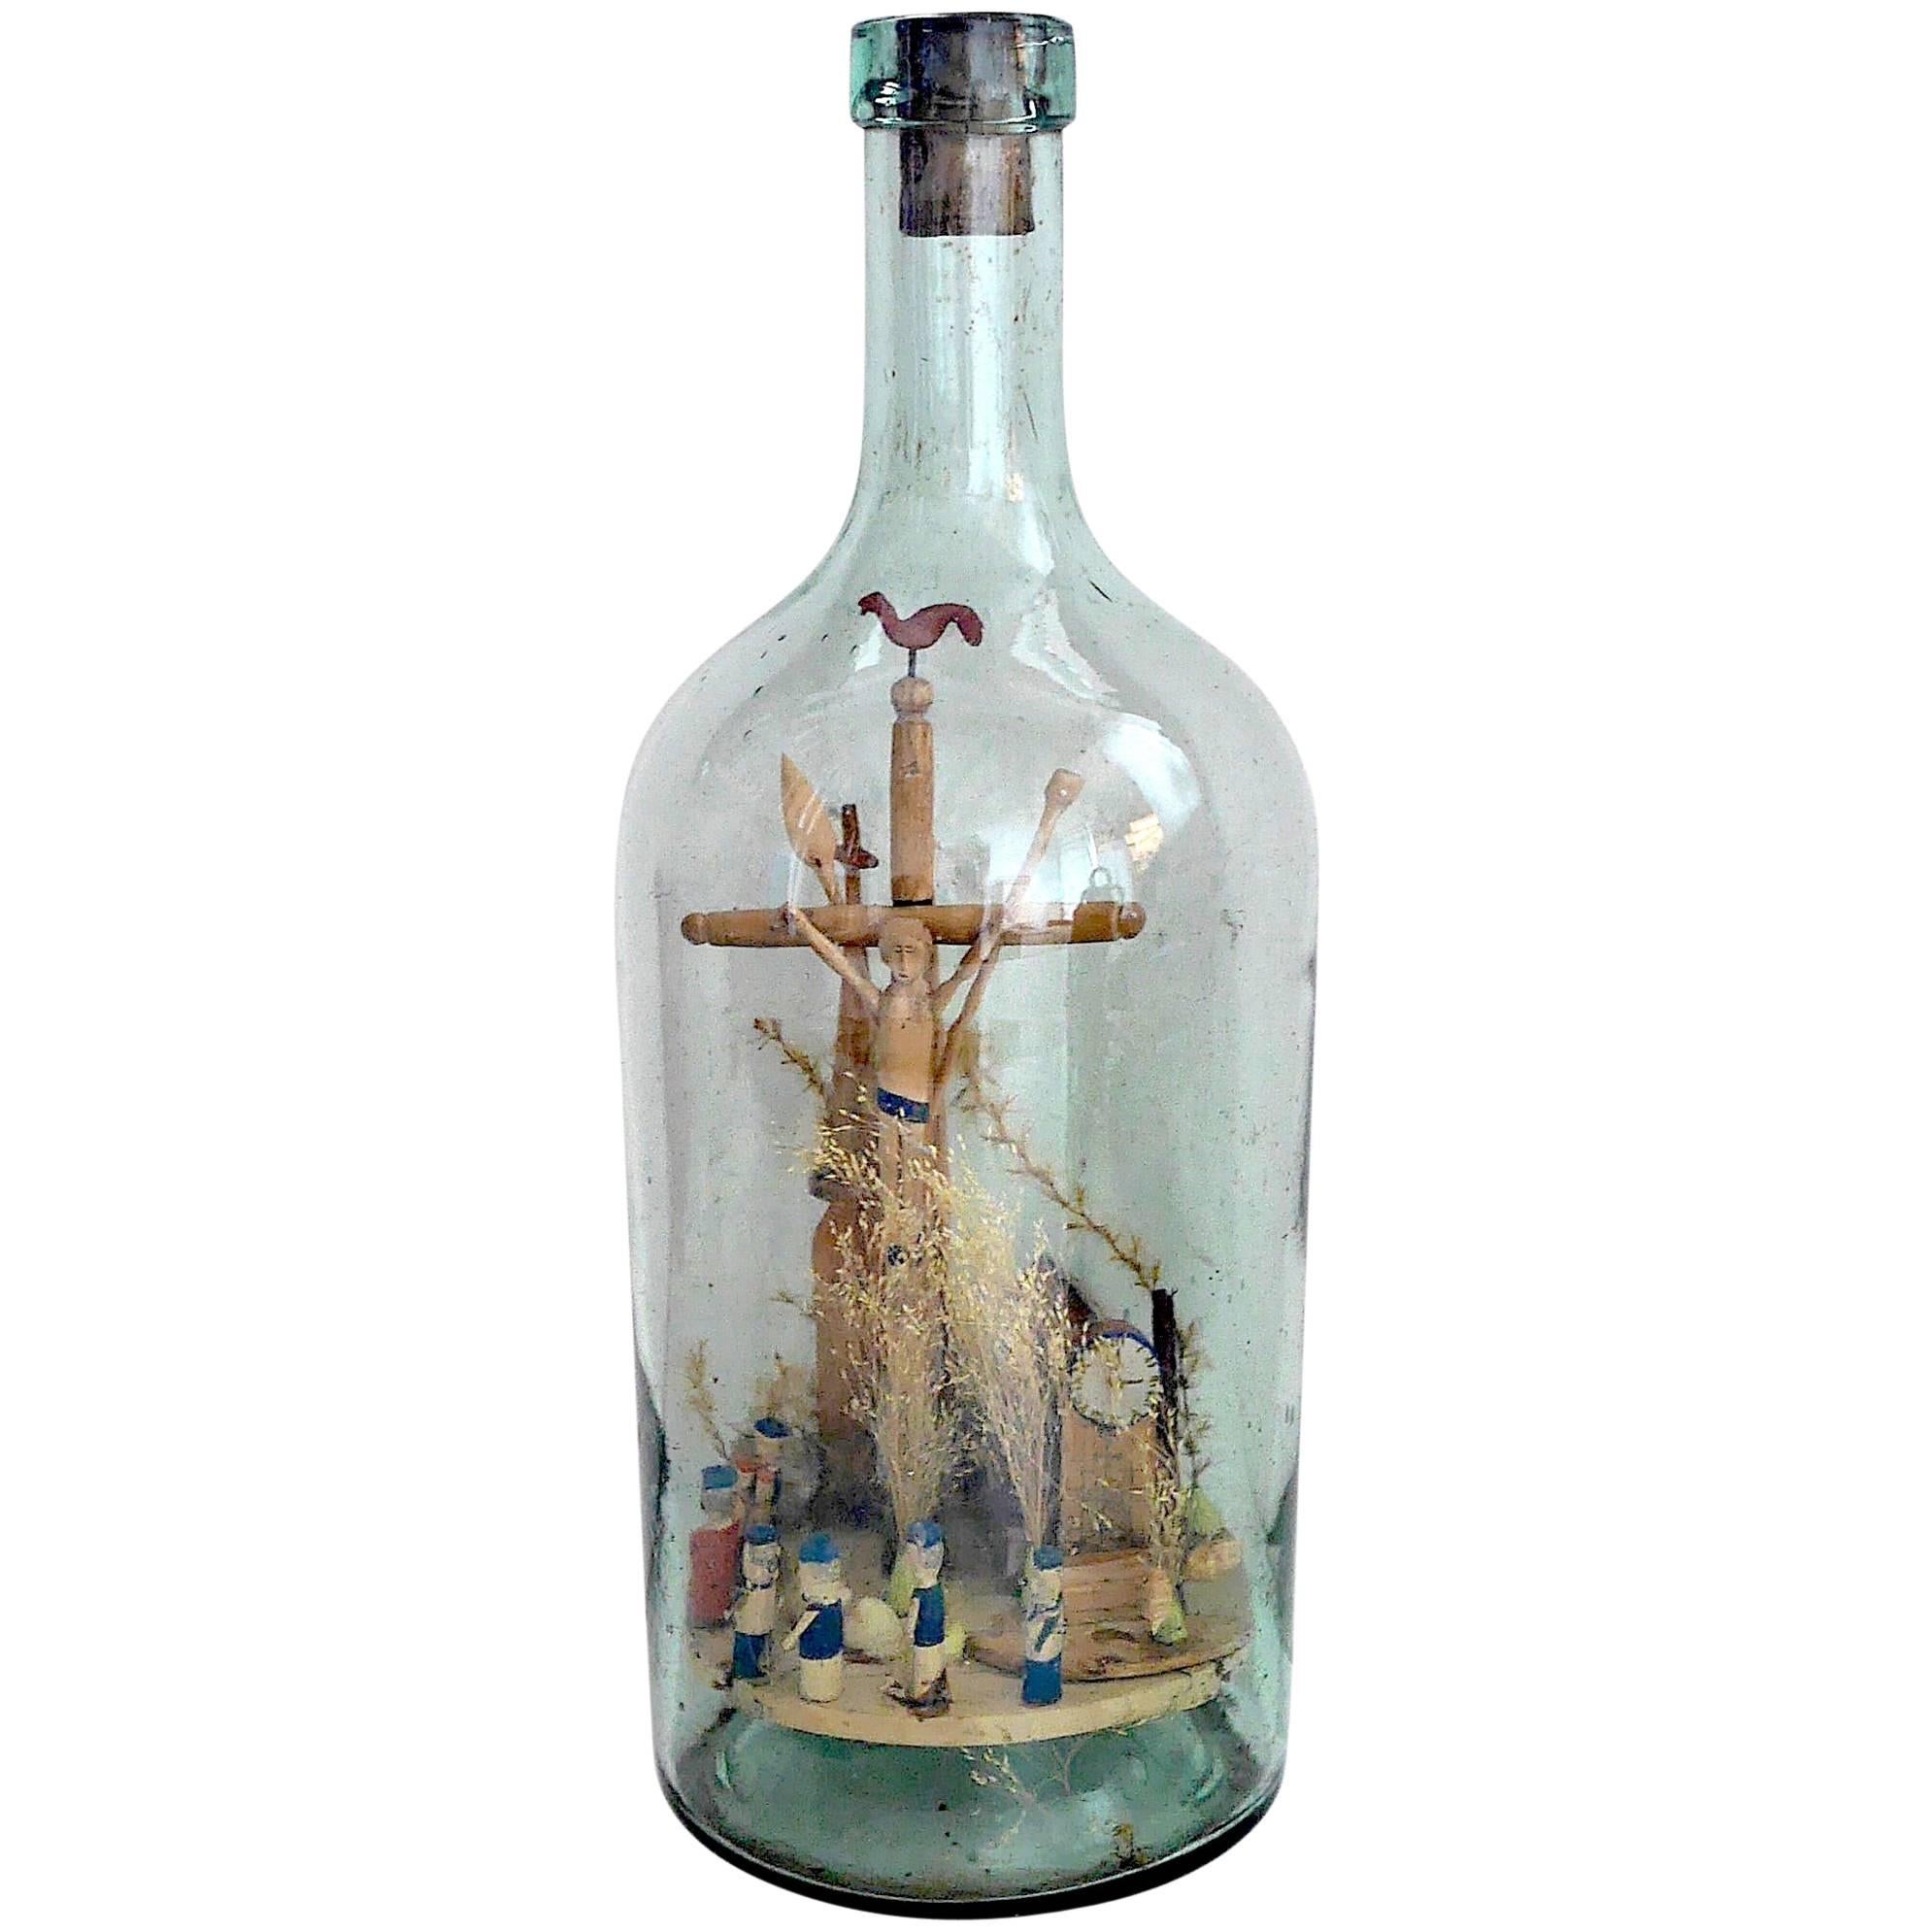 Bargeman's cross in a Glass Bottle (19th century) For Sale